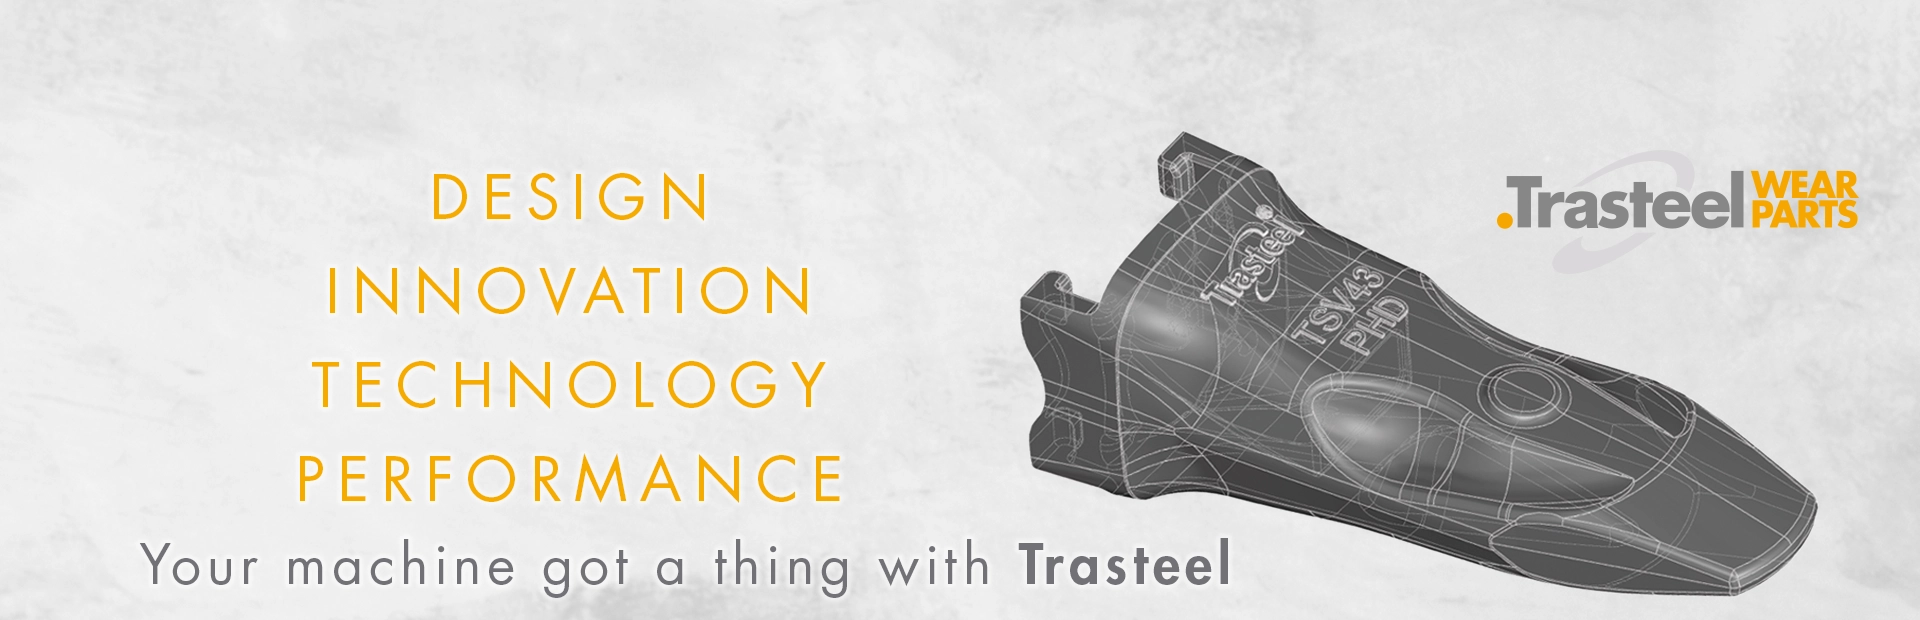 Design, innovation, technology, performance - Trasteel Wear Parts